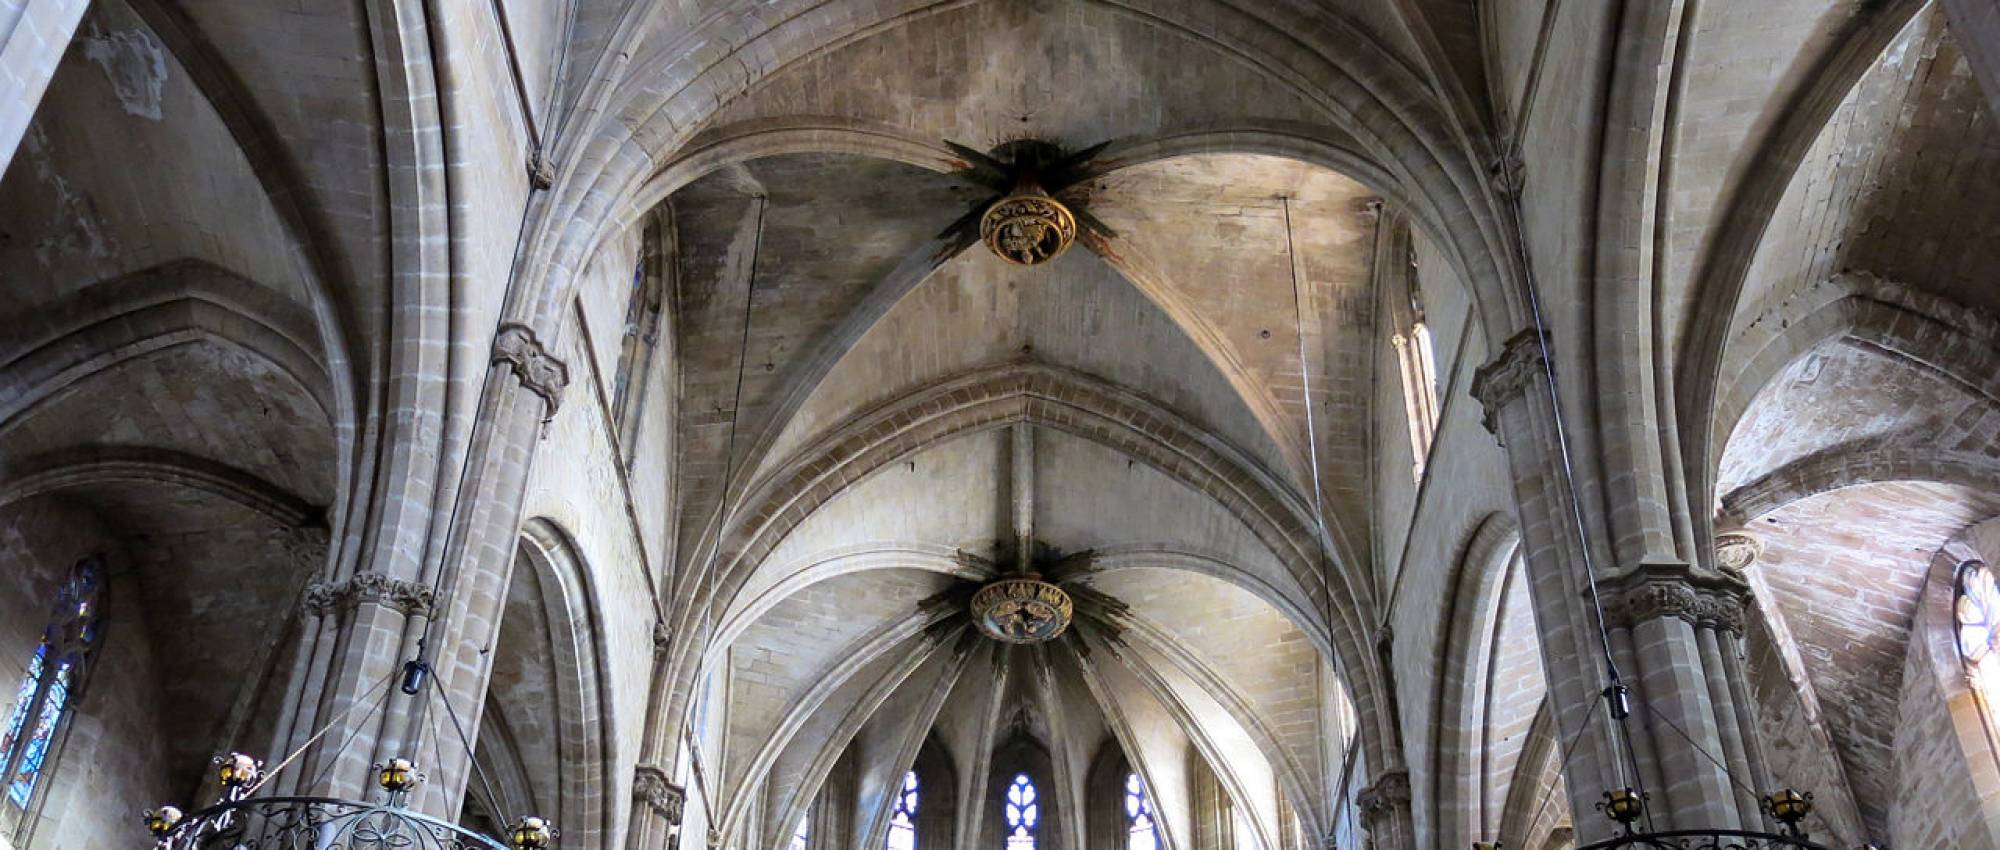 Nau central de la catedral de Sta. Maria de Tortosa. Enric / Wikimedia Commons. CC BY-SA 3.0